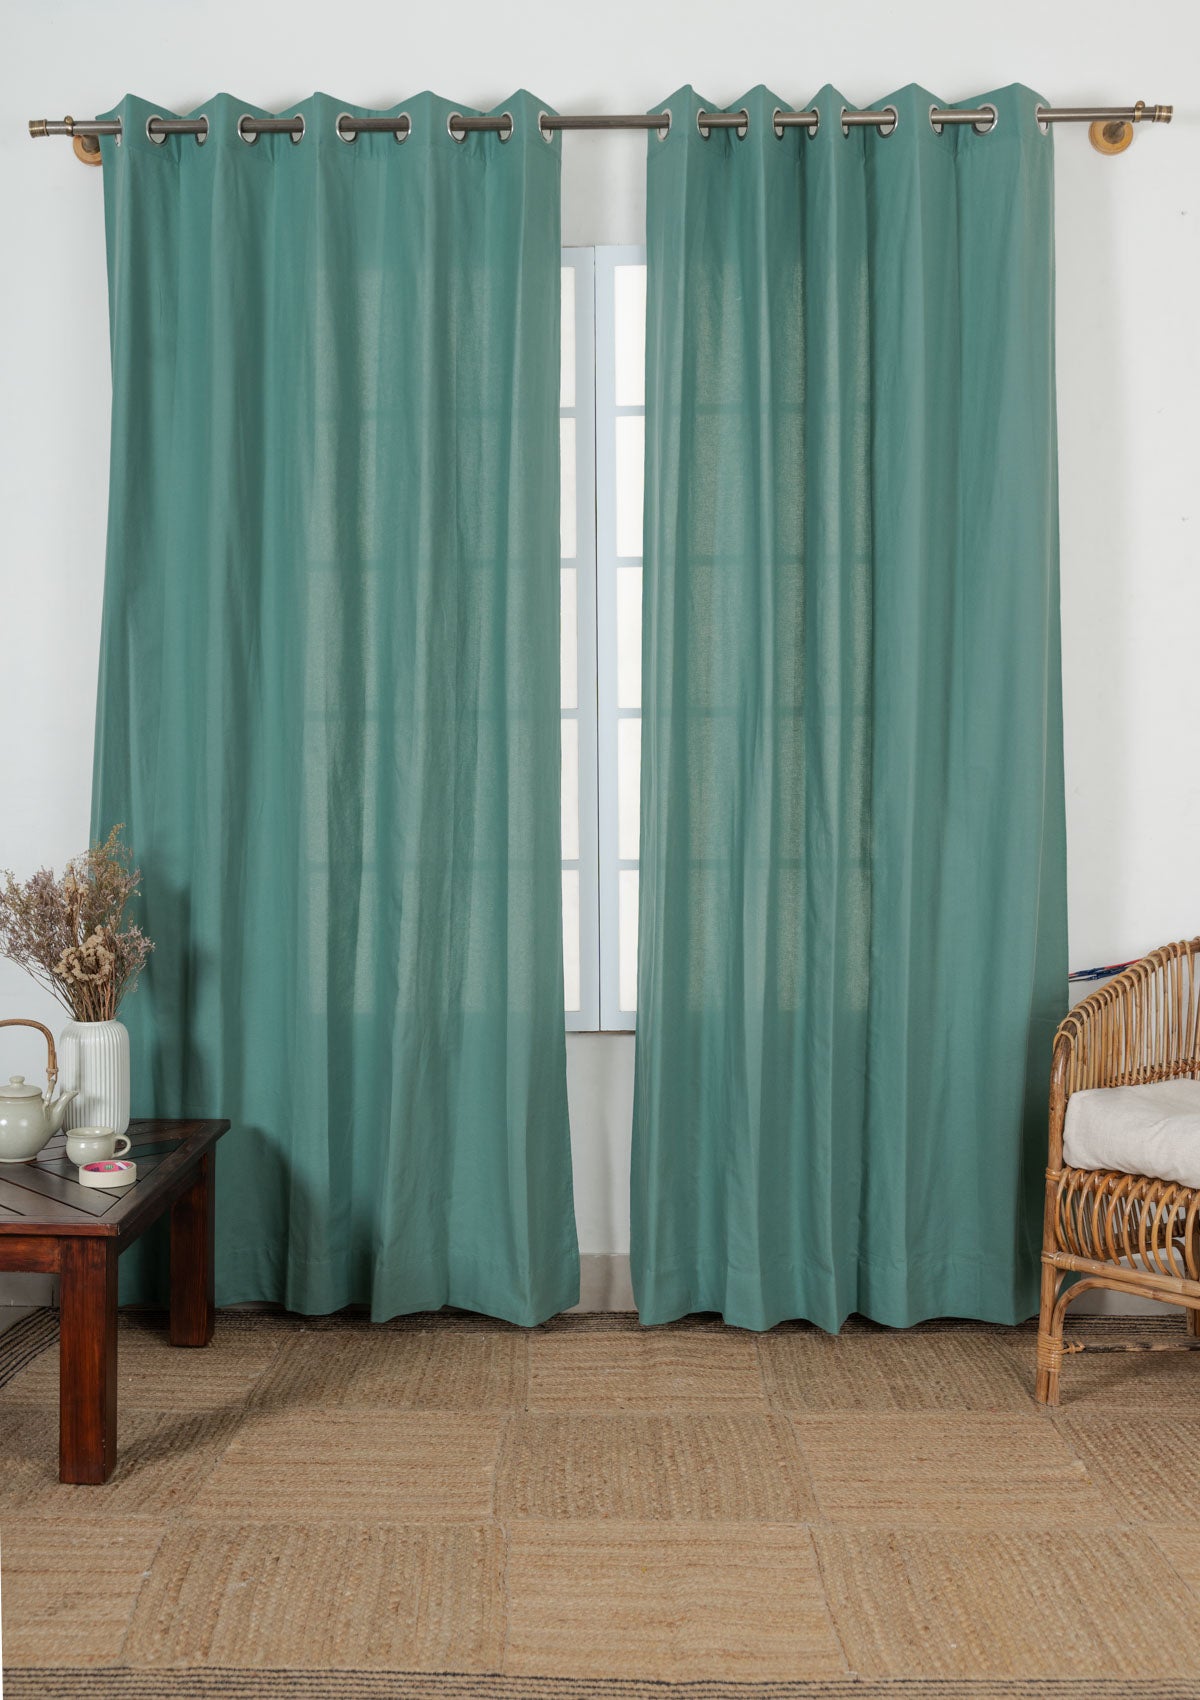 Solid aqua blue 100% cotton plain curtain for bedroom - Room darkening - Pack of 1